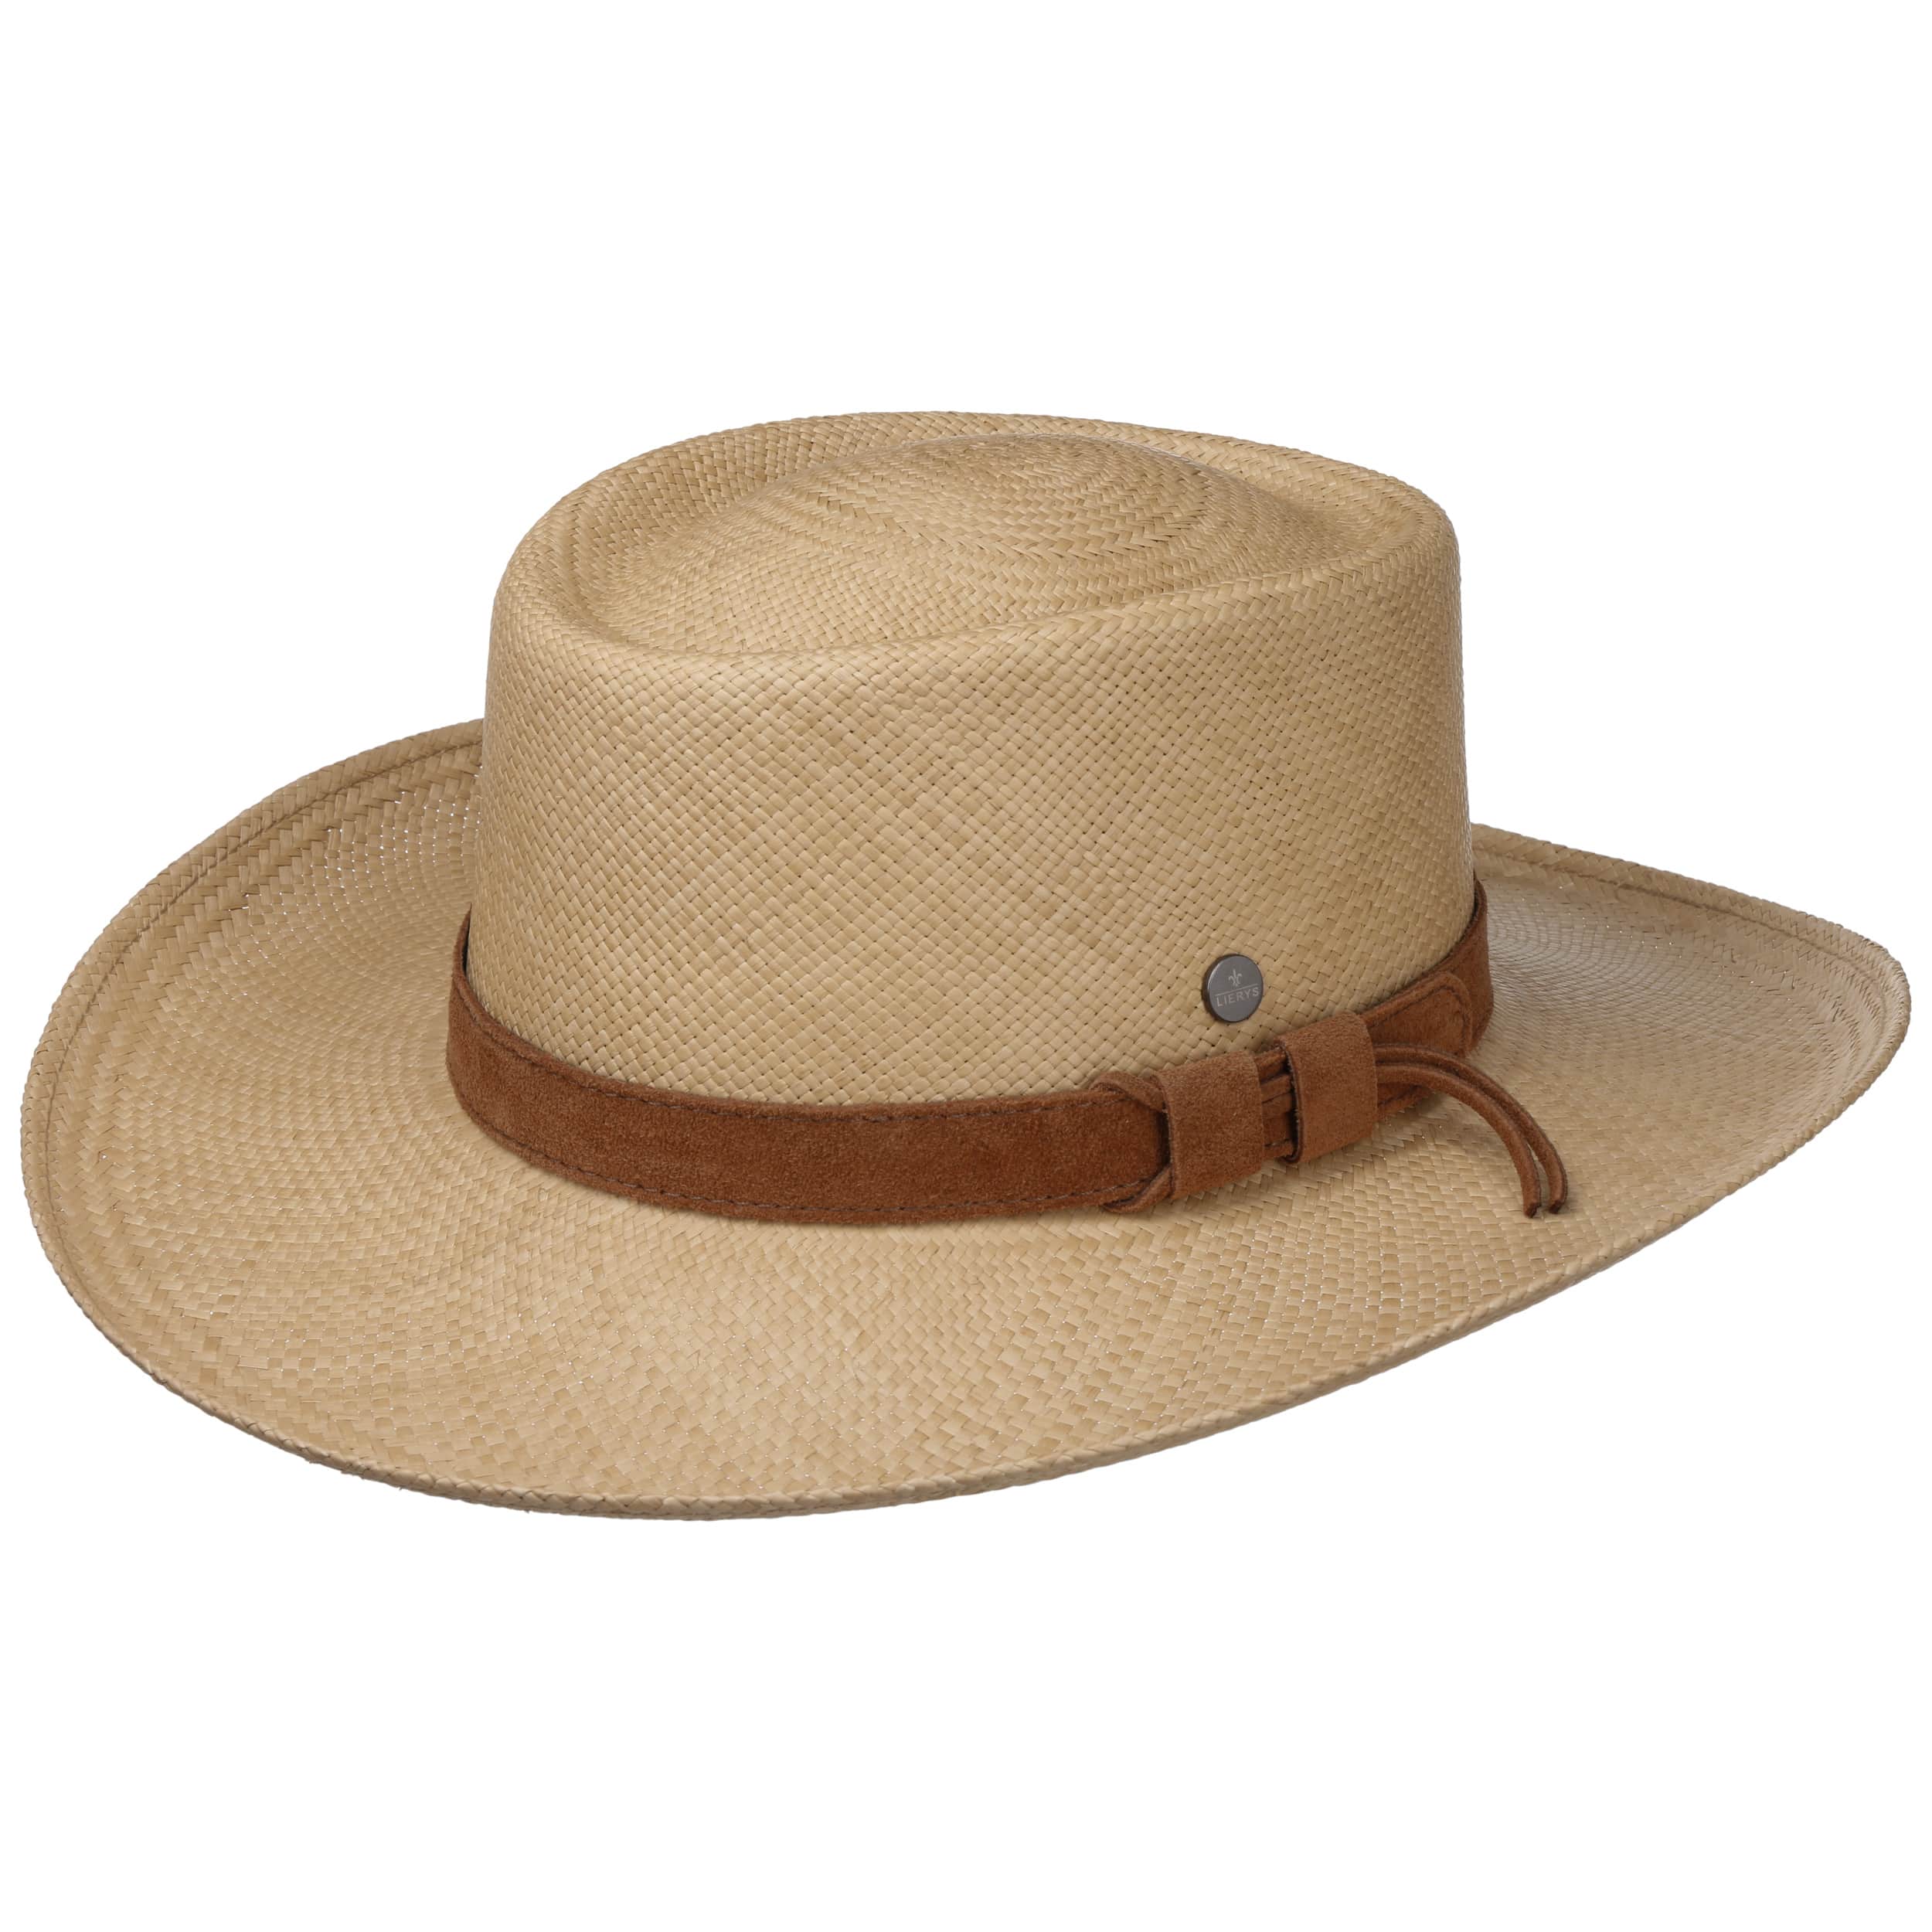 Panama Straw Cap by Lierys -->   High-quality Lierys hats,  beanies & caps